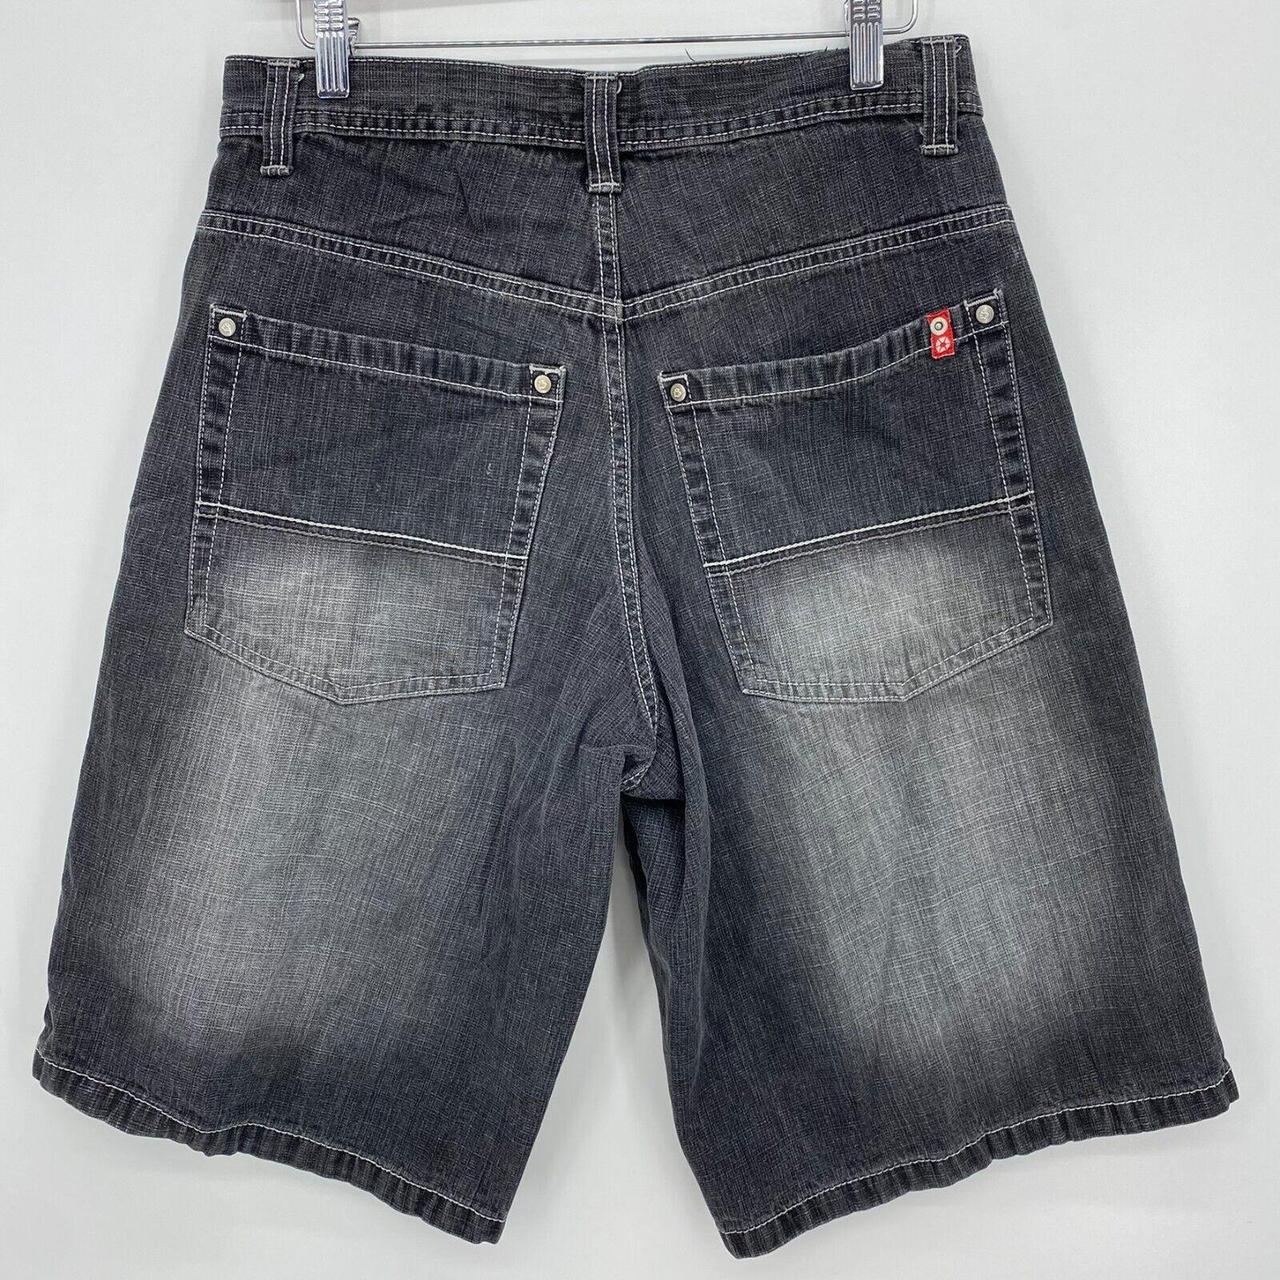 Product Image 2 - South Pole Denim Shorts Men's